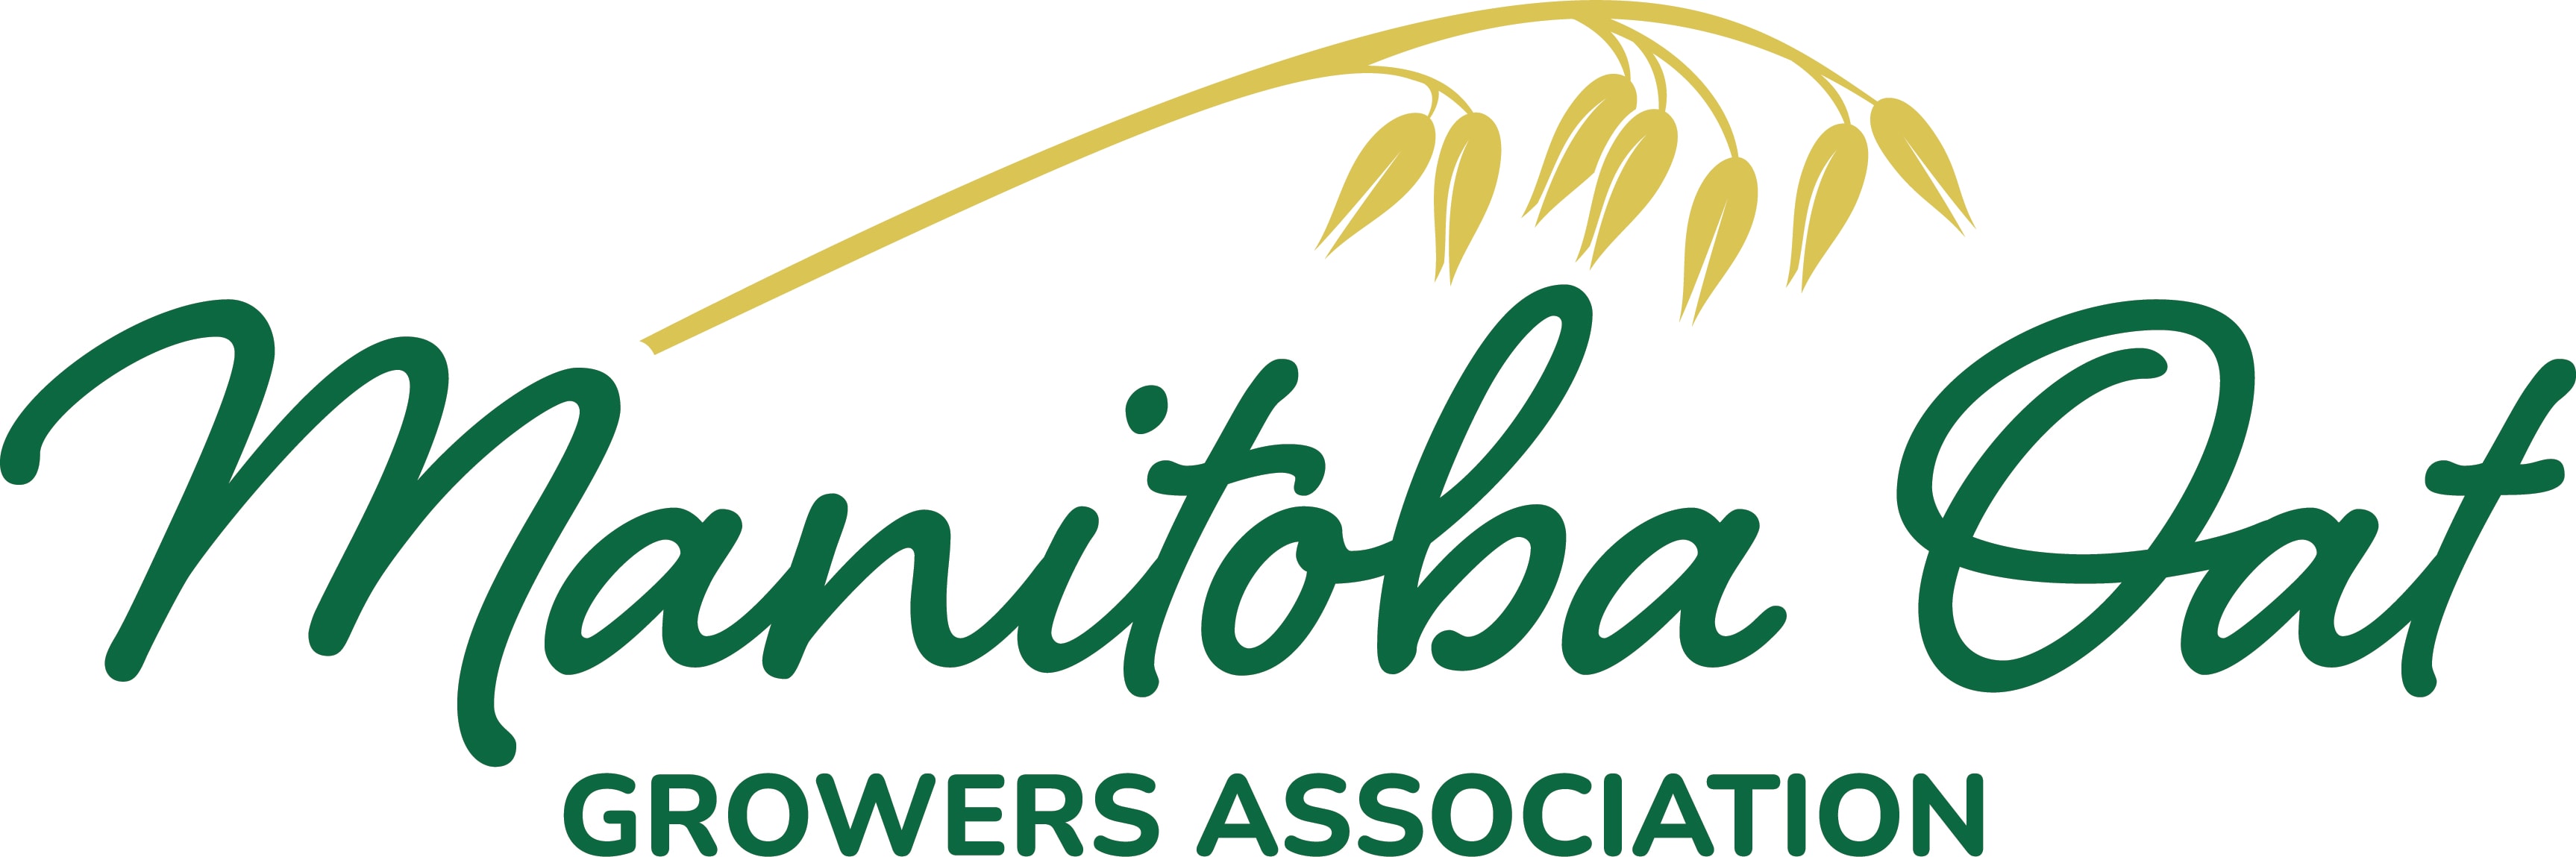 Manitoba Oat Growers Association logo